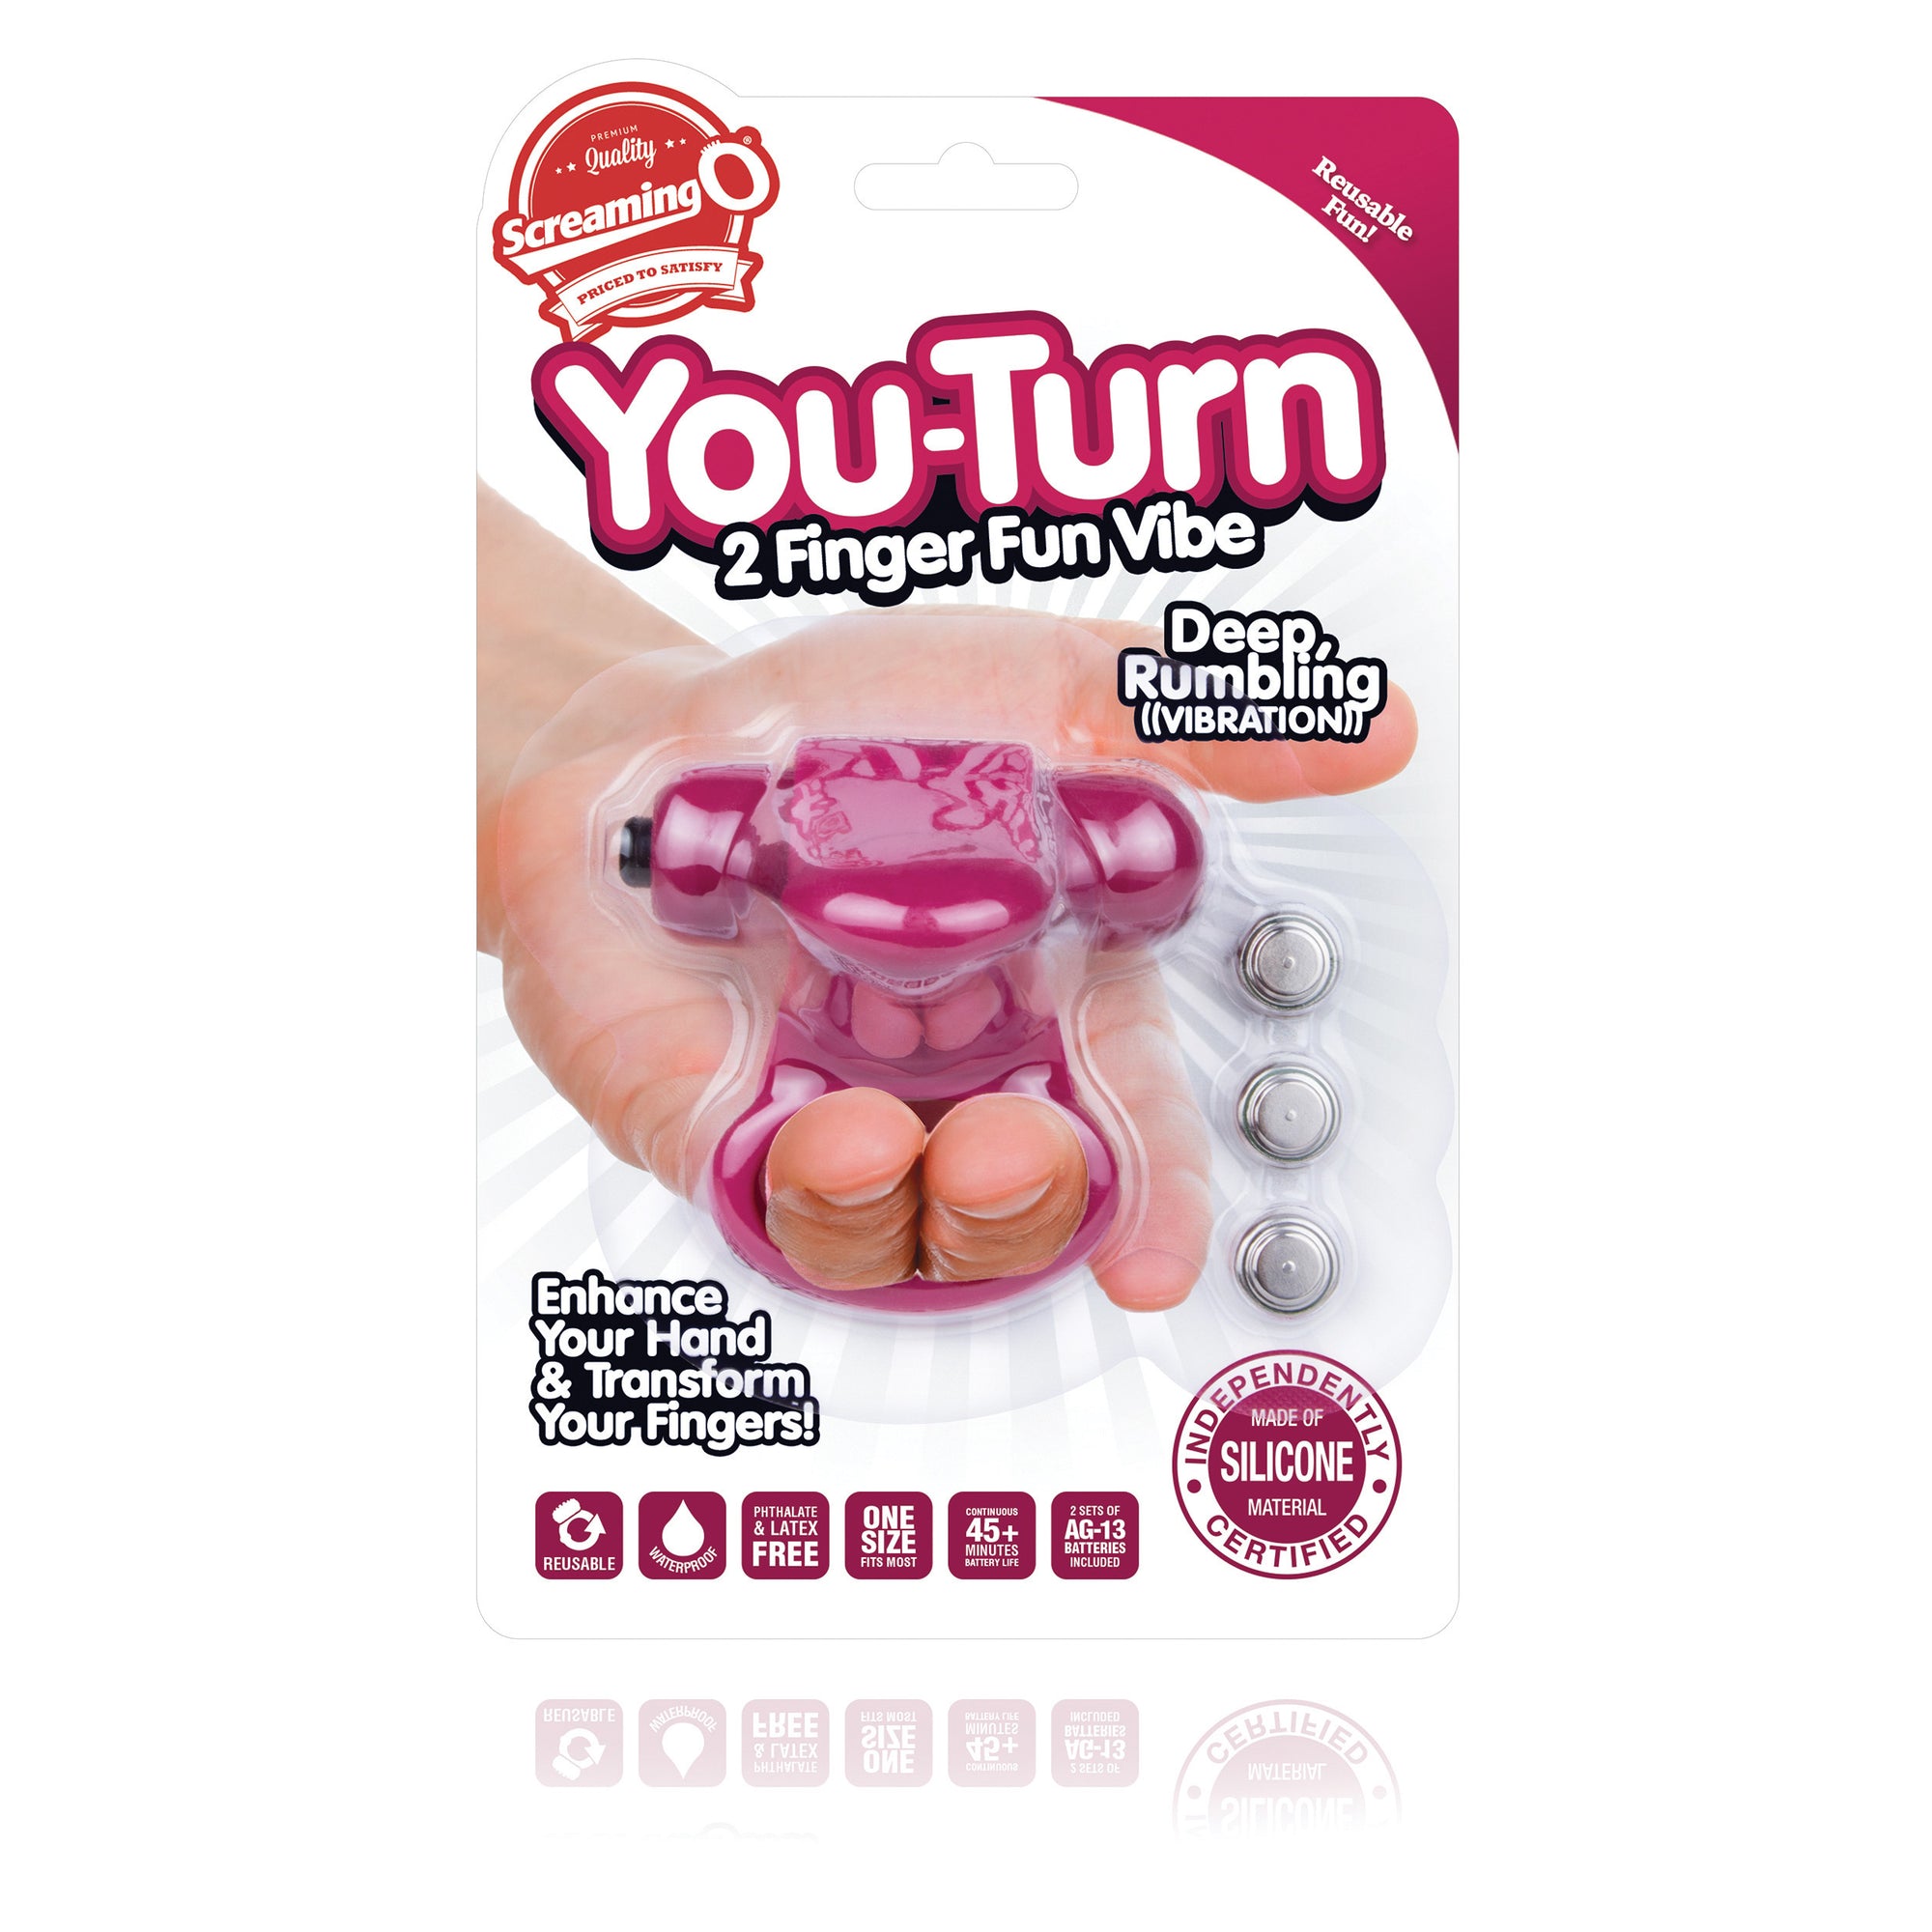 You-Turn 2 Finger Fun Vibe - Merlot